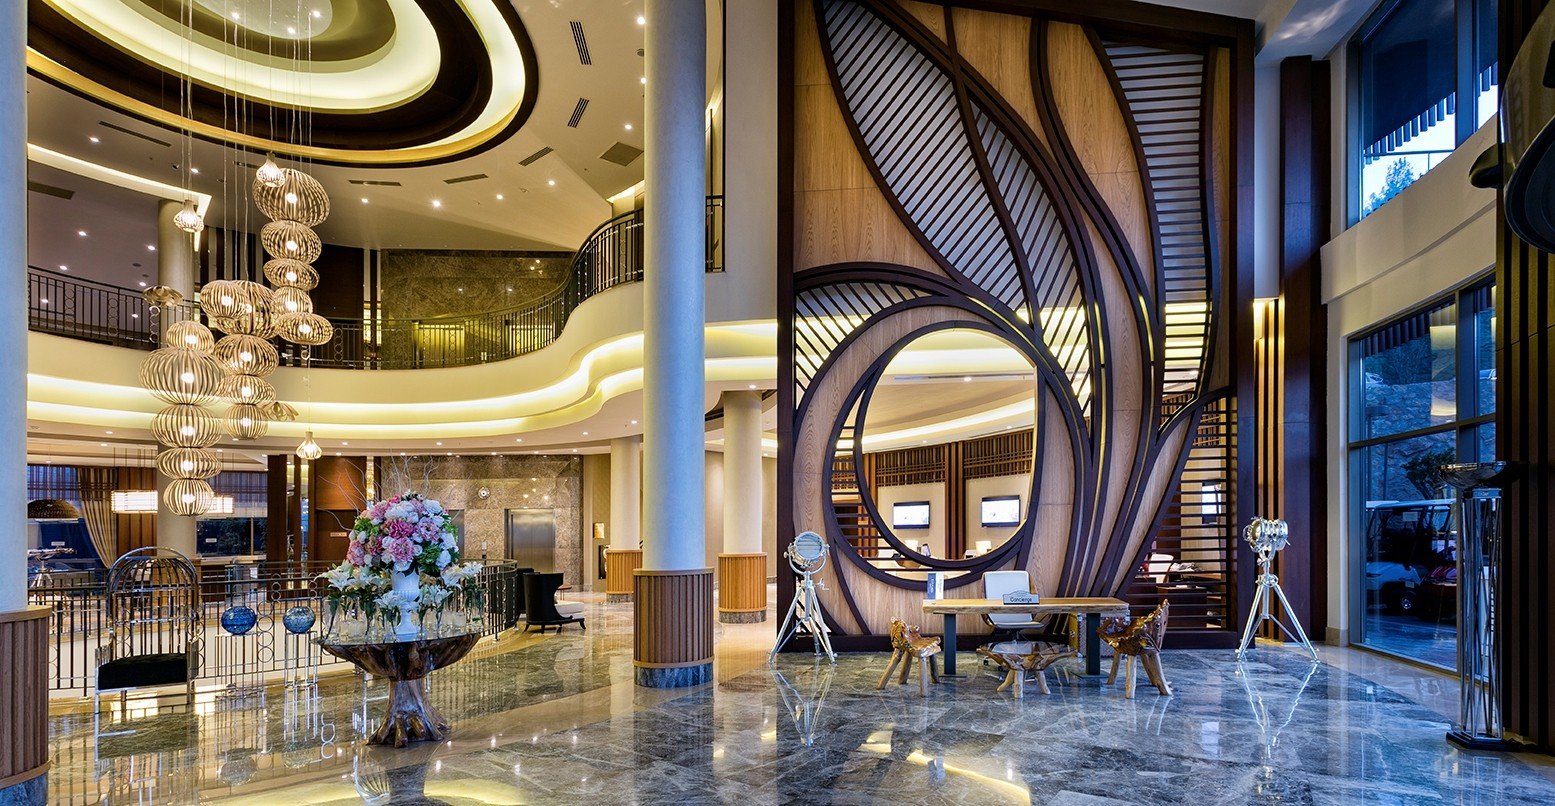 Luxury Hotel Design
